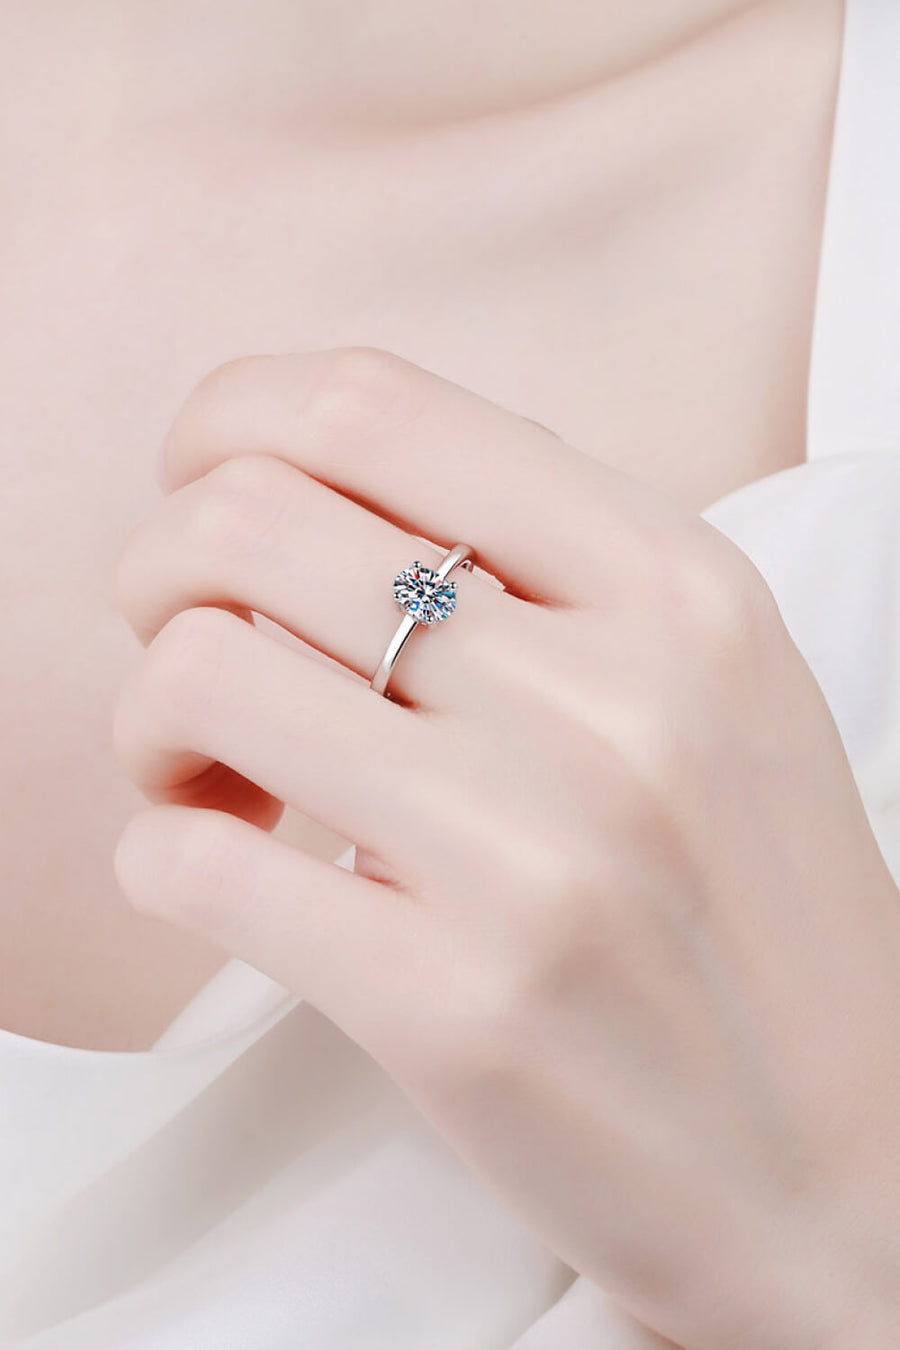 Best Diamond Ring Jewelry Gifts for Women | 1 Carat Oval Diamond Ring - Sunset Days | MASON New York